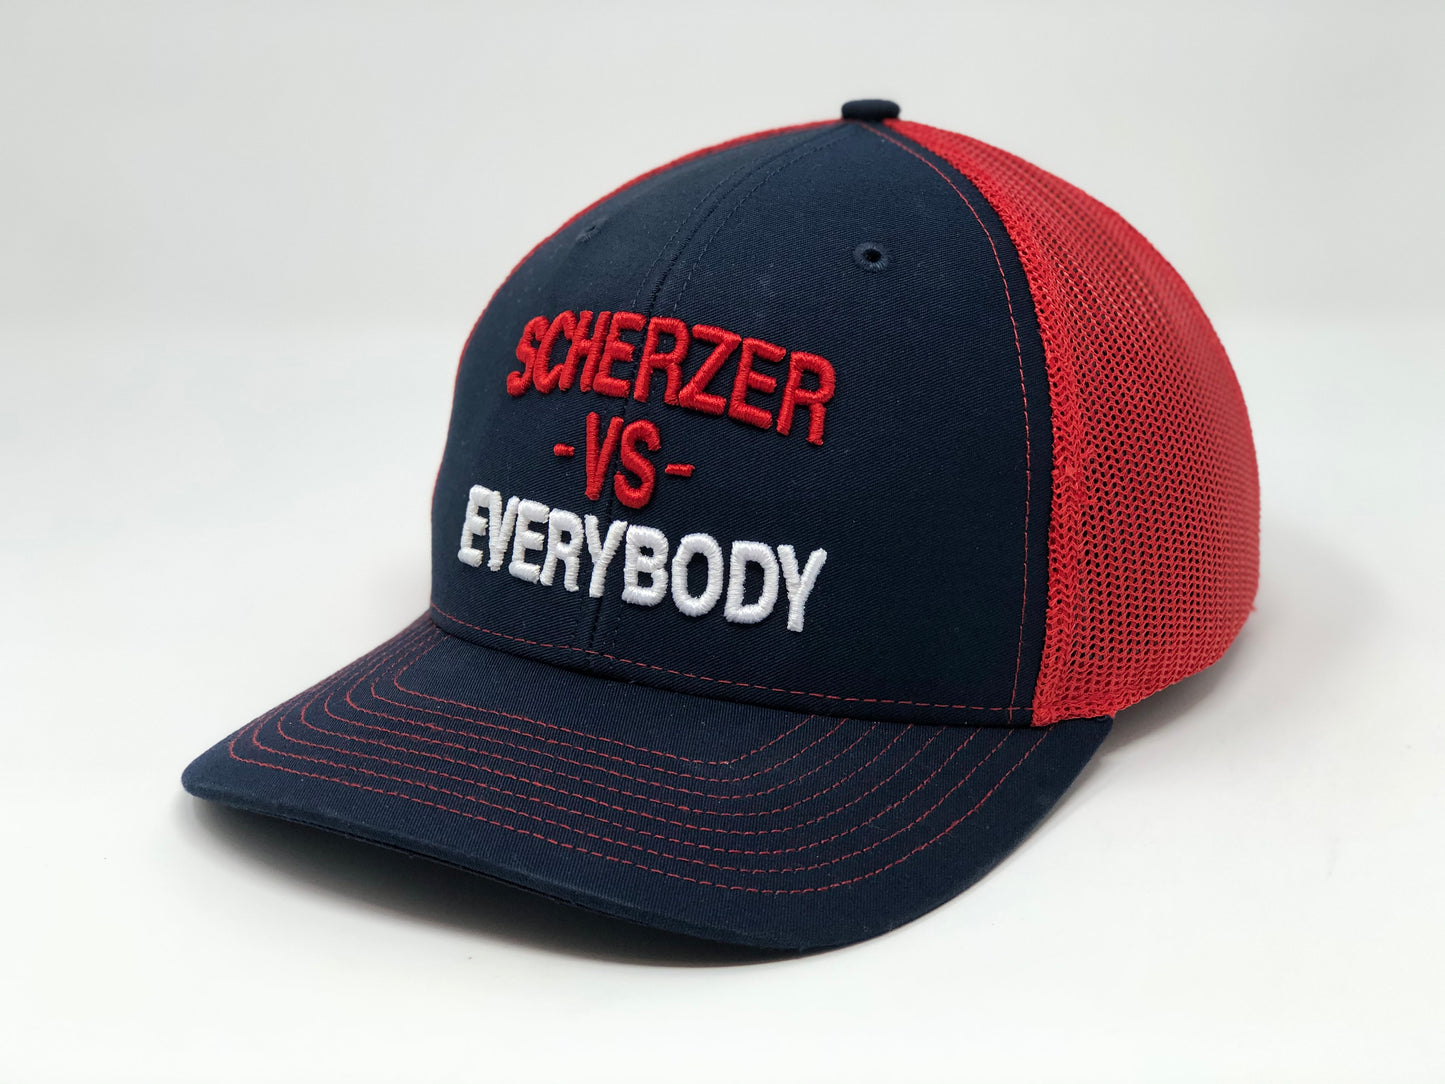 Max Scherzer vs EVERYBODY Hat - Navy/Red Trucker